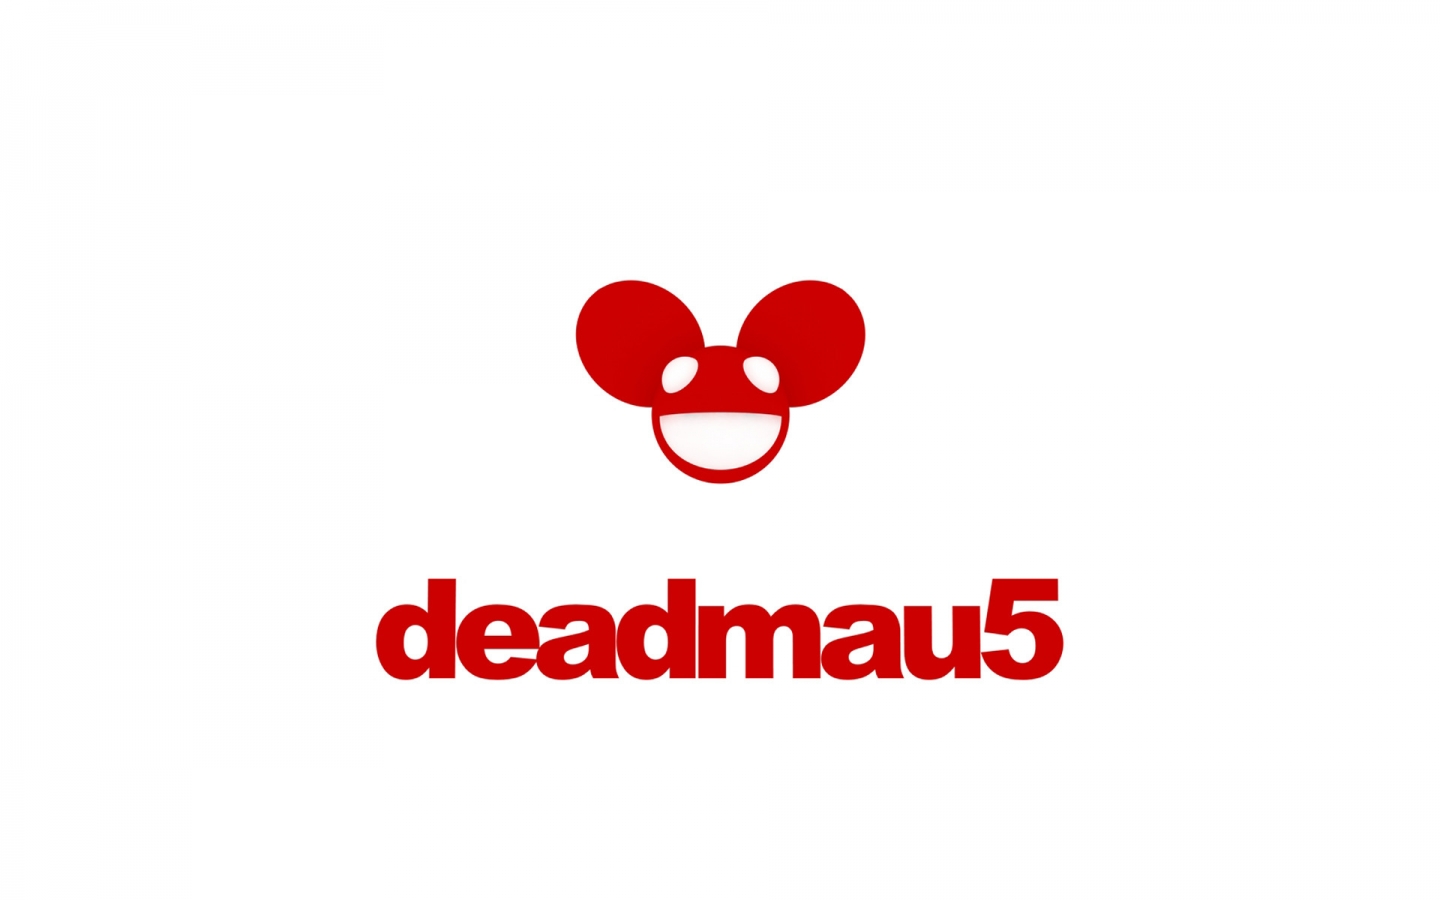 Deadmau5 Logo for 1440 x 900 widescreen resolution